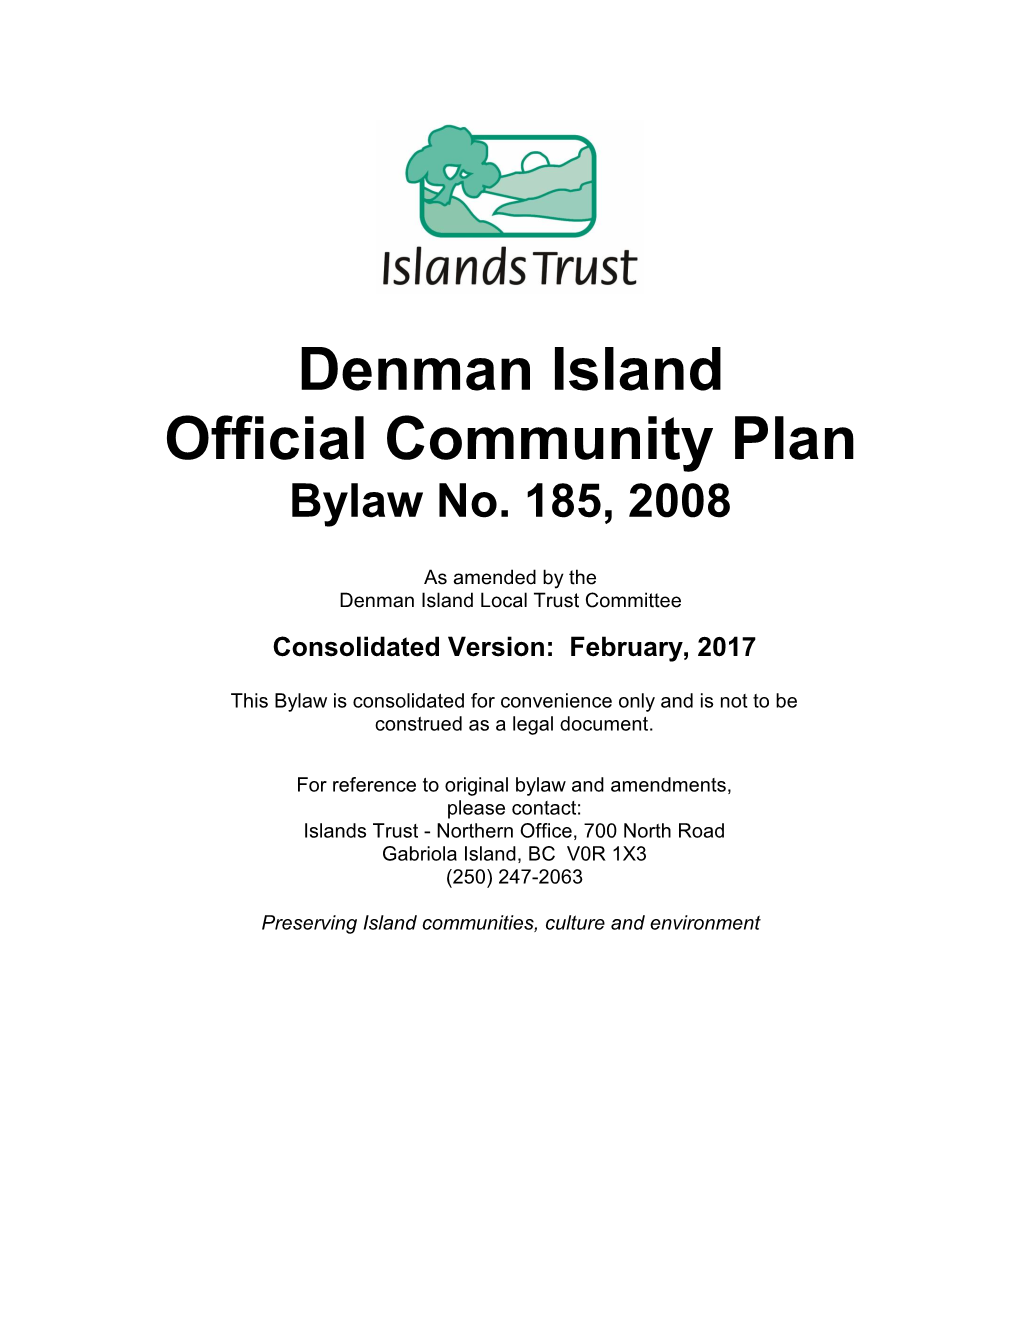 Denman Island Official Community Plan Bylaw No